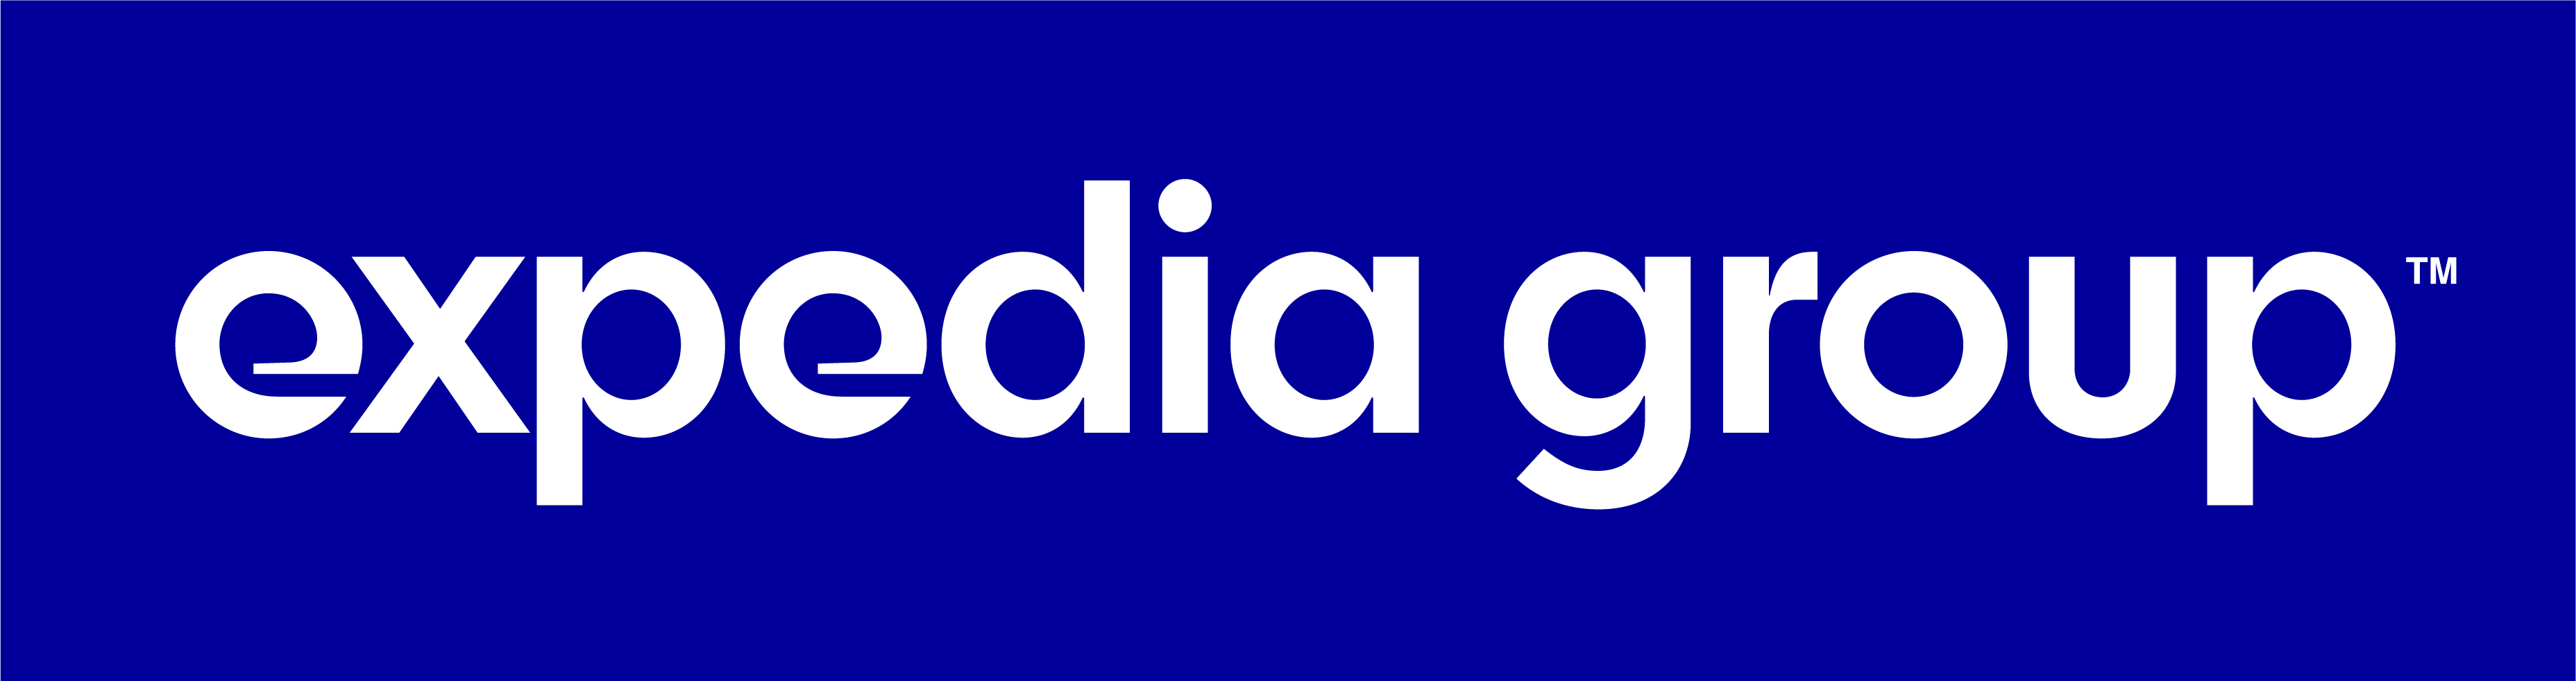 Expedia Group 2022 Global Impact Report 3BL Media